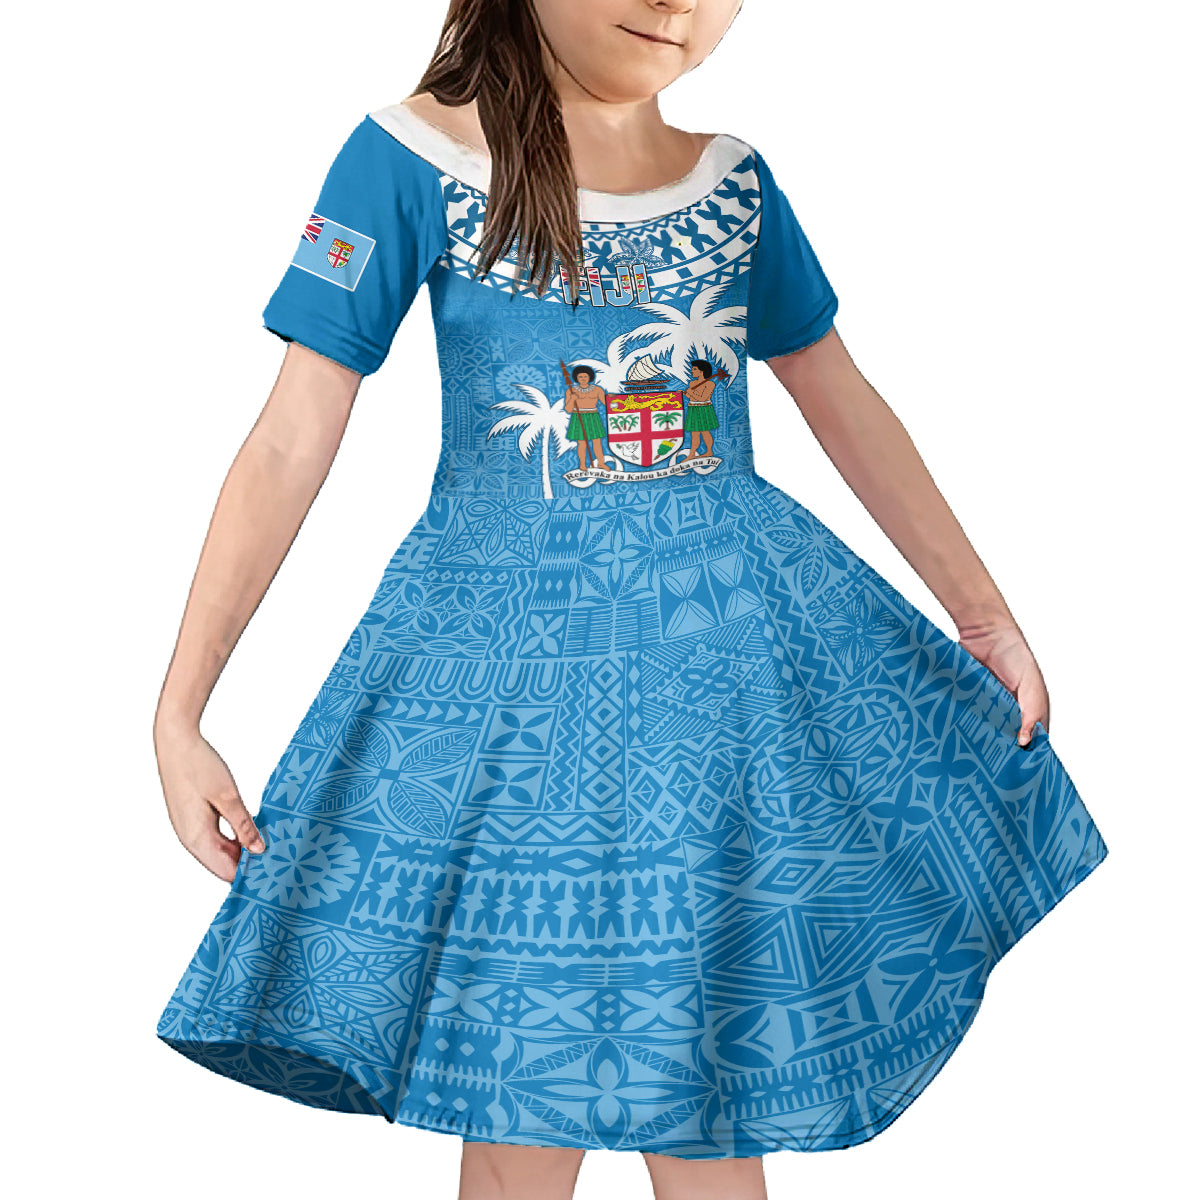 fiji-kid-short-sleeve-dress-bula-fijian-tapa-pattern